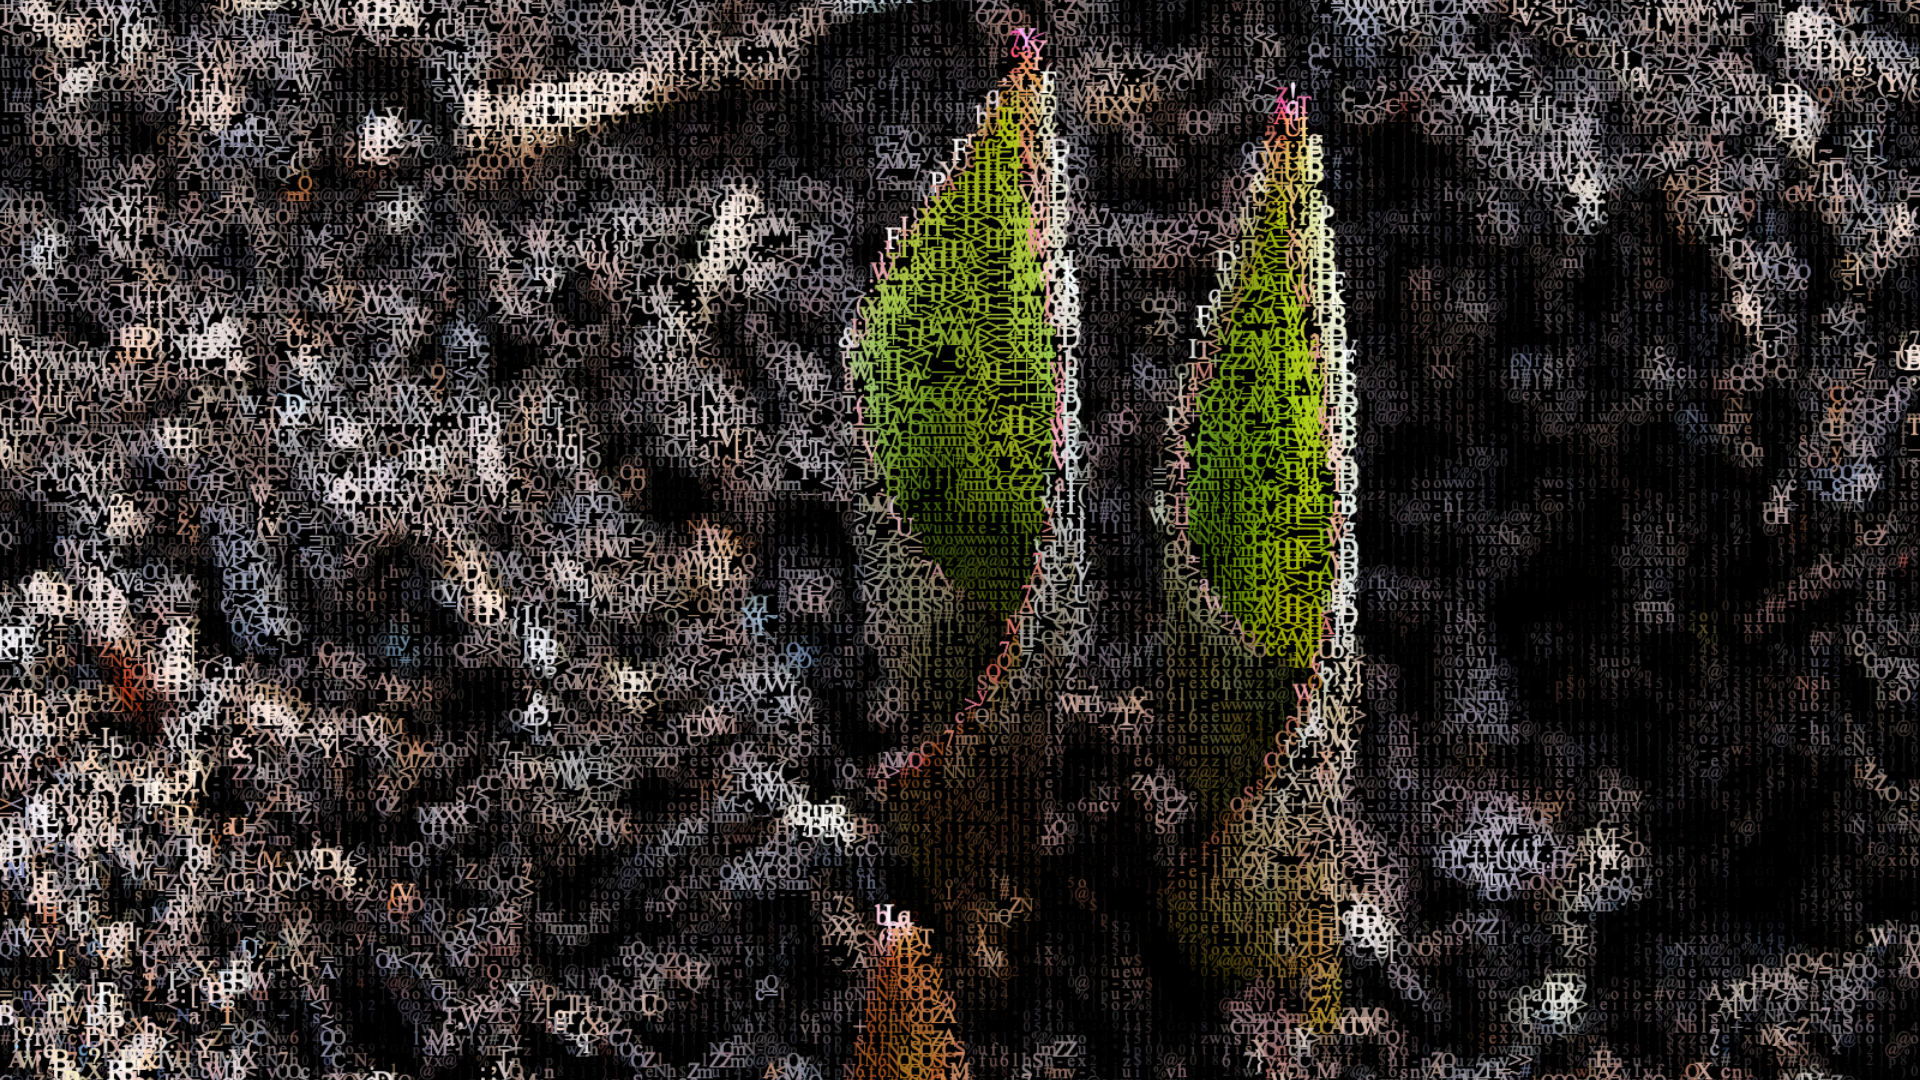 Tulip plant buds with "Matrix" overlay